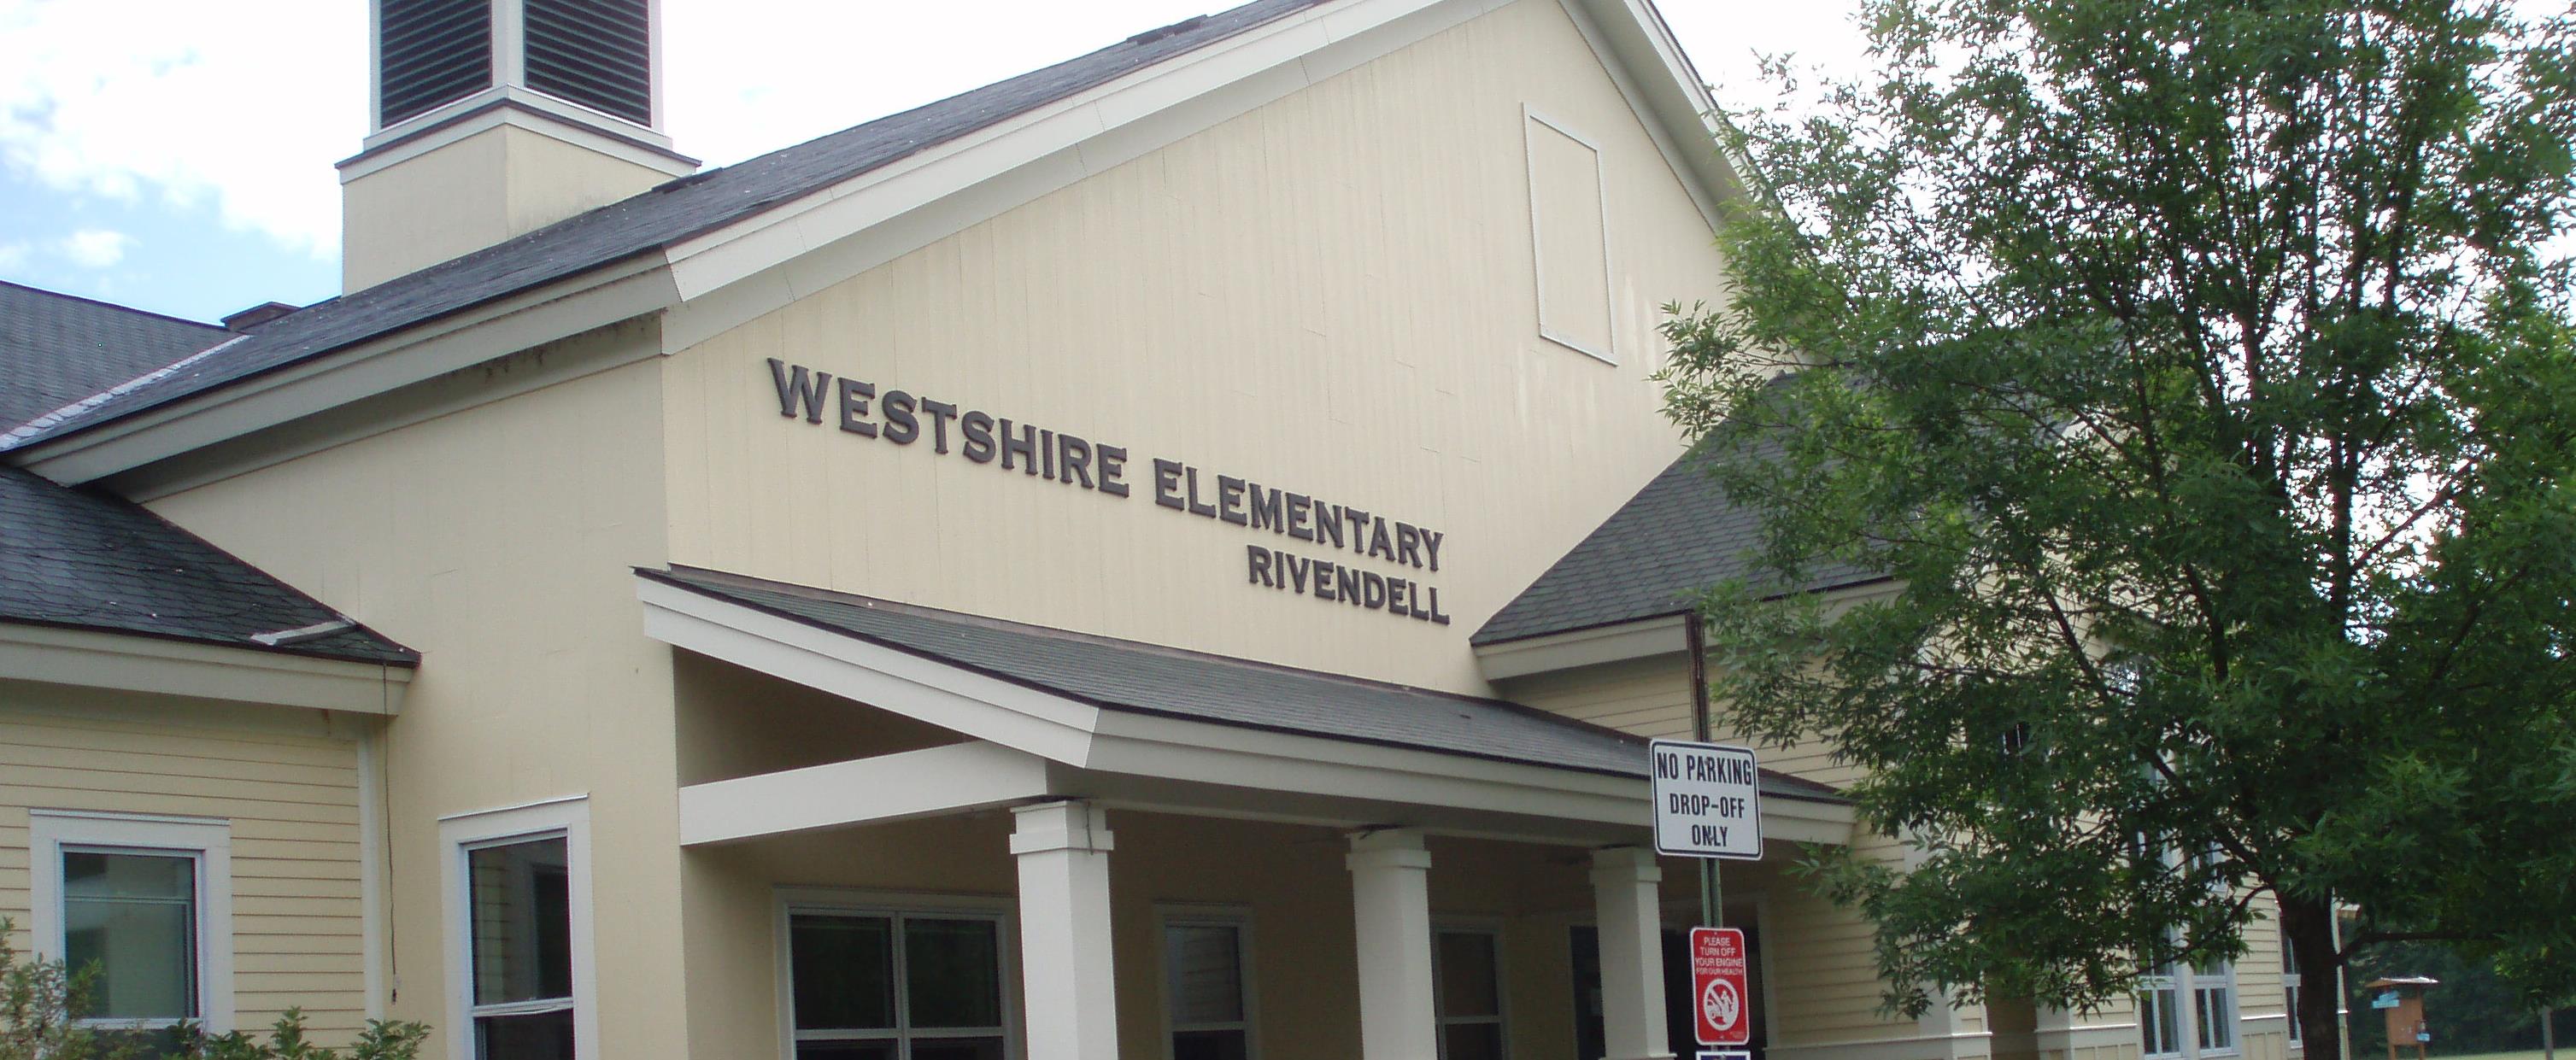 Westshire Elementary School